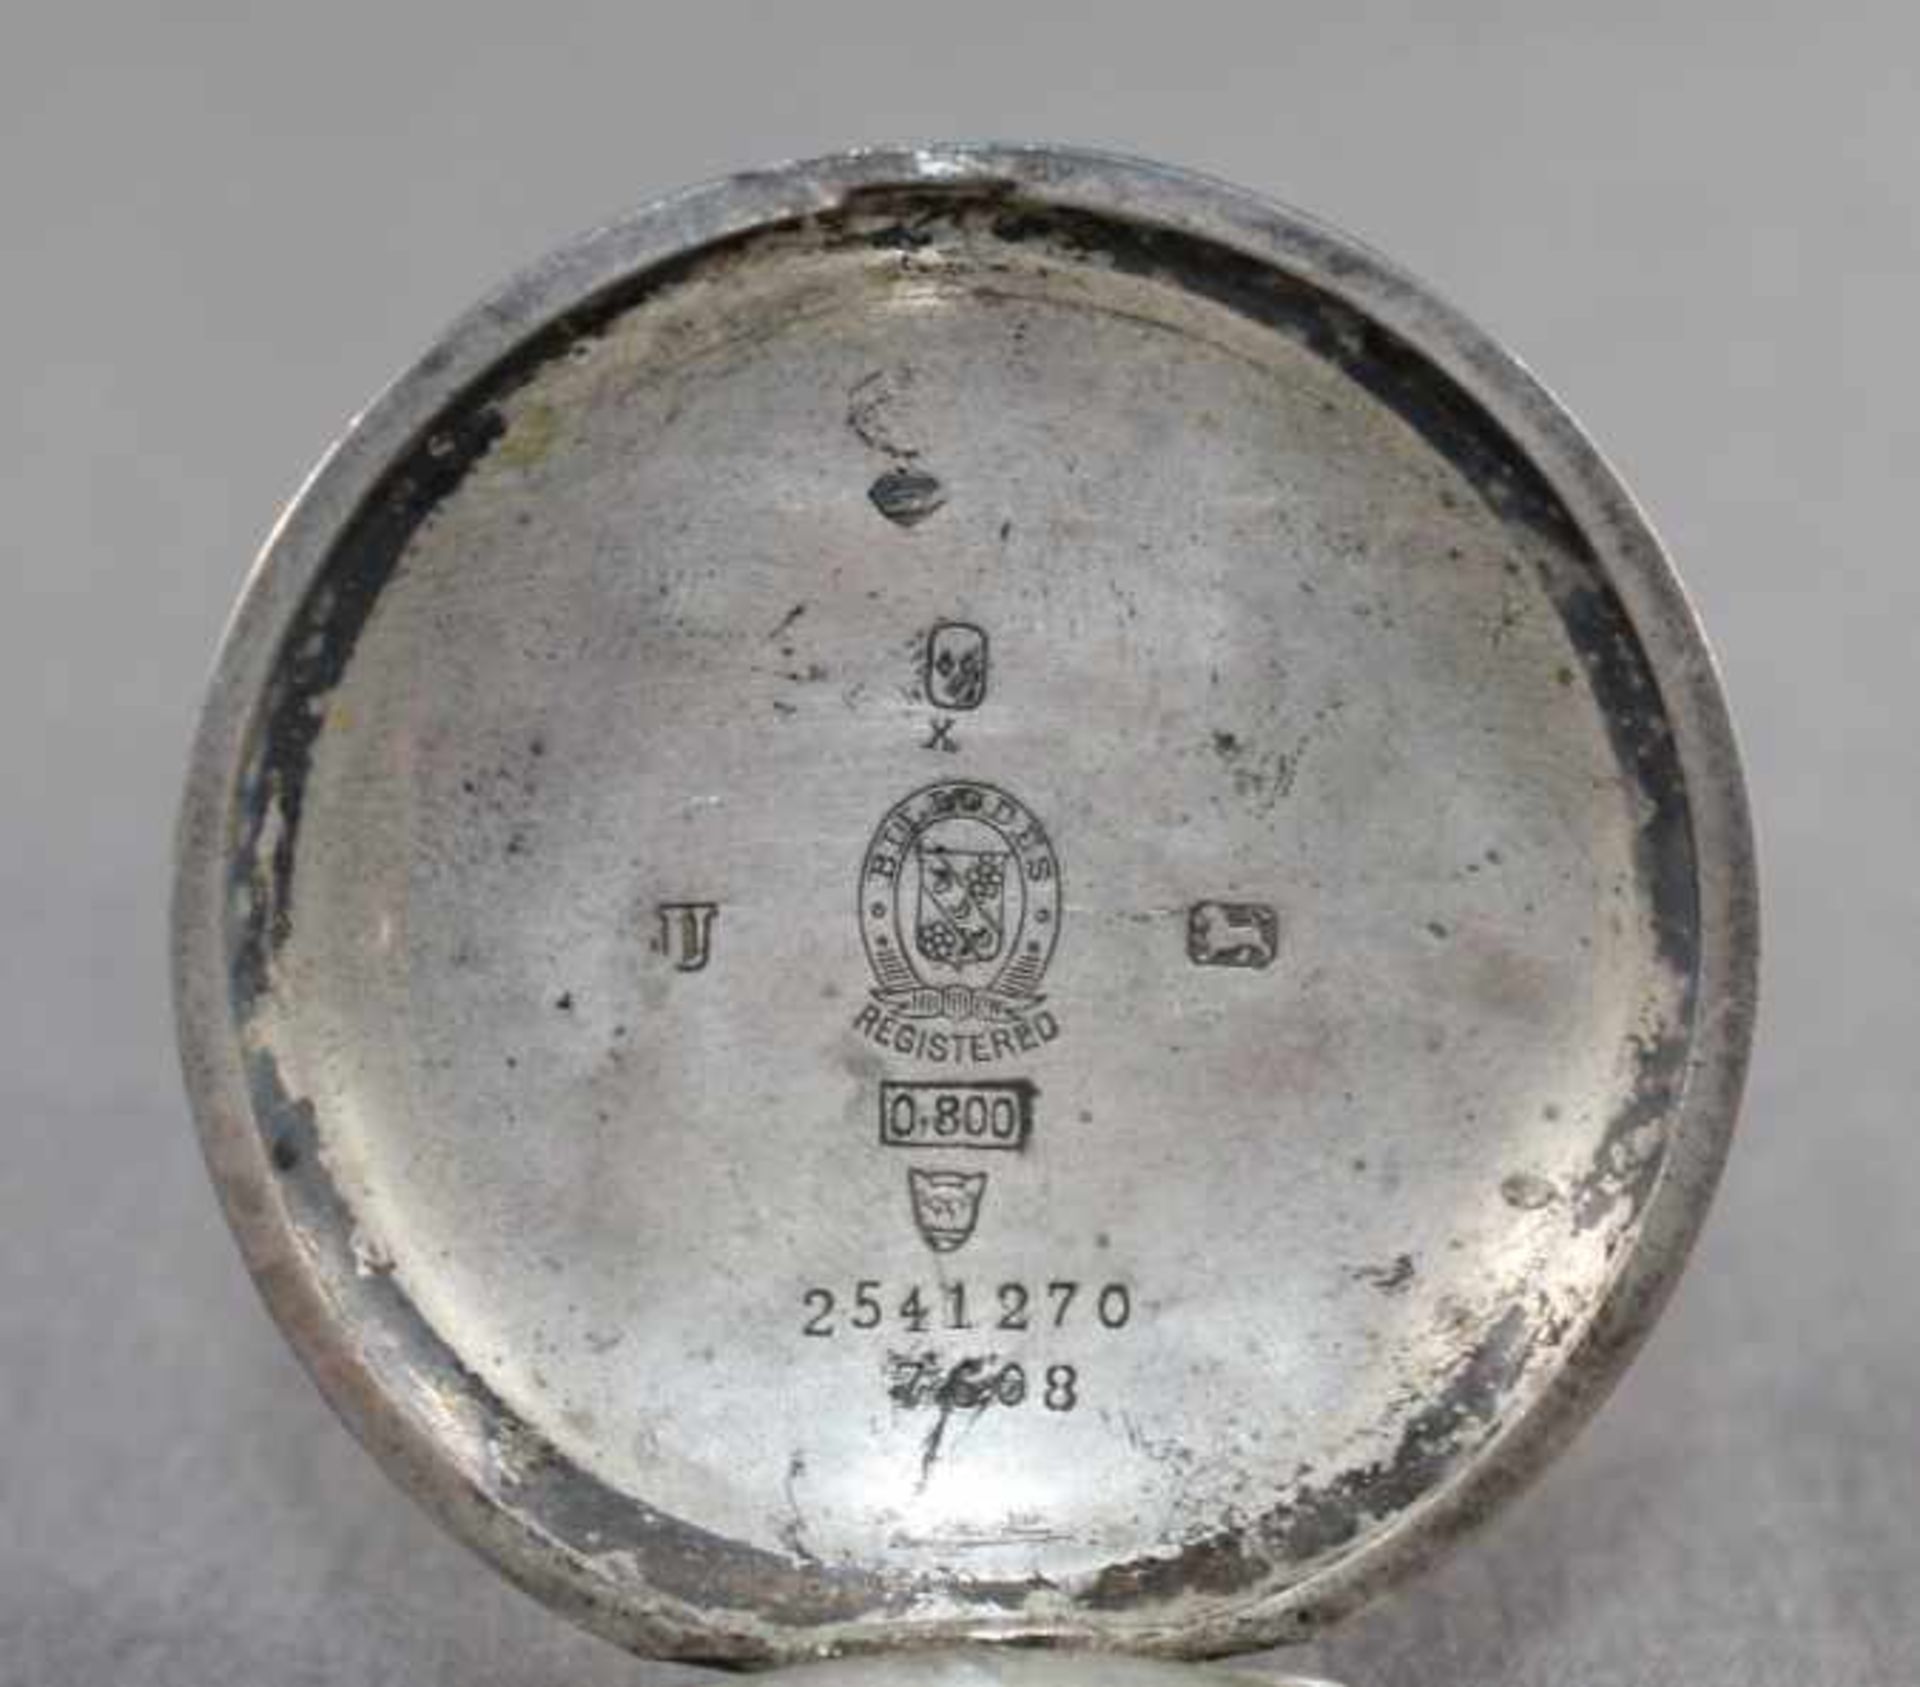 1 Savonette Silber (800/000), Punzen u.a. Billodes, No. 25412707608 "K. Serikoffs & Co - Image 3 of 6